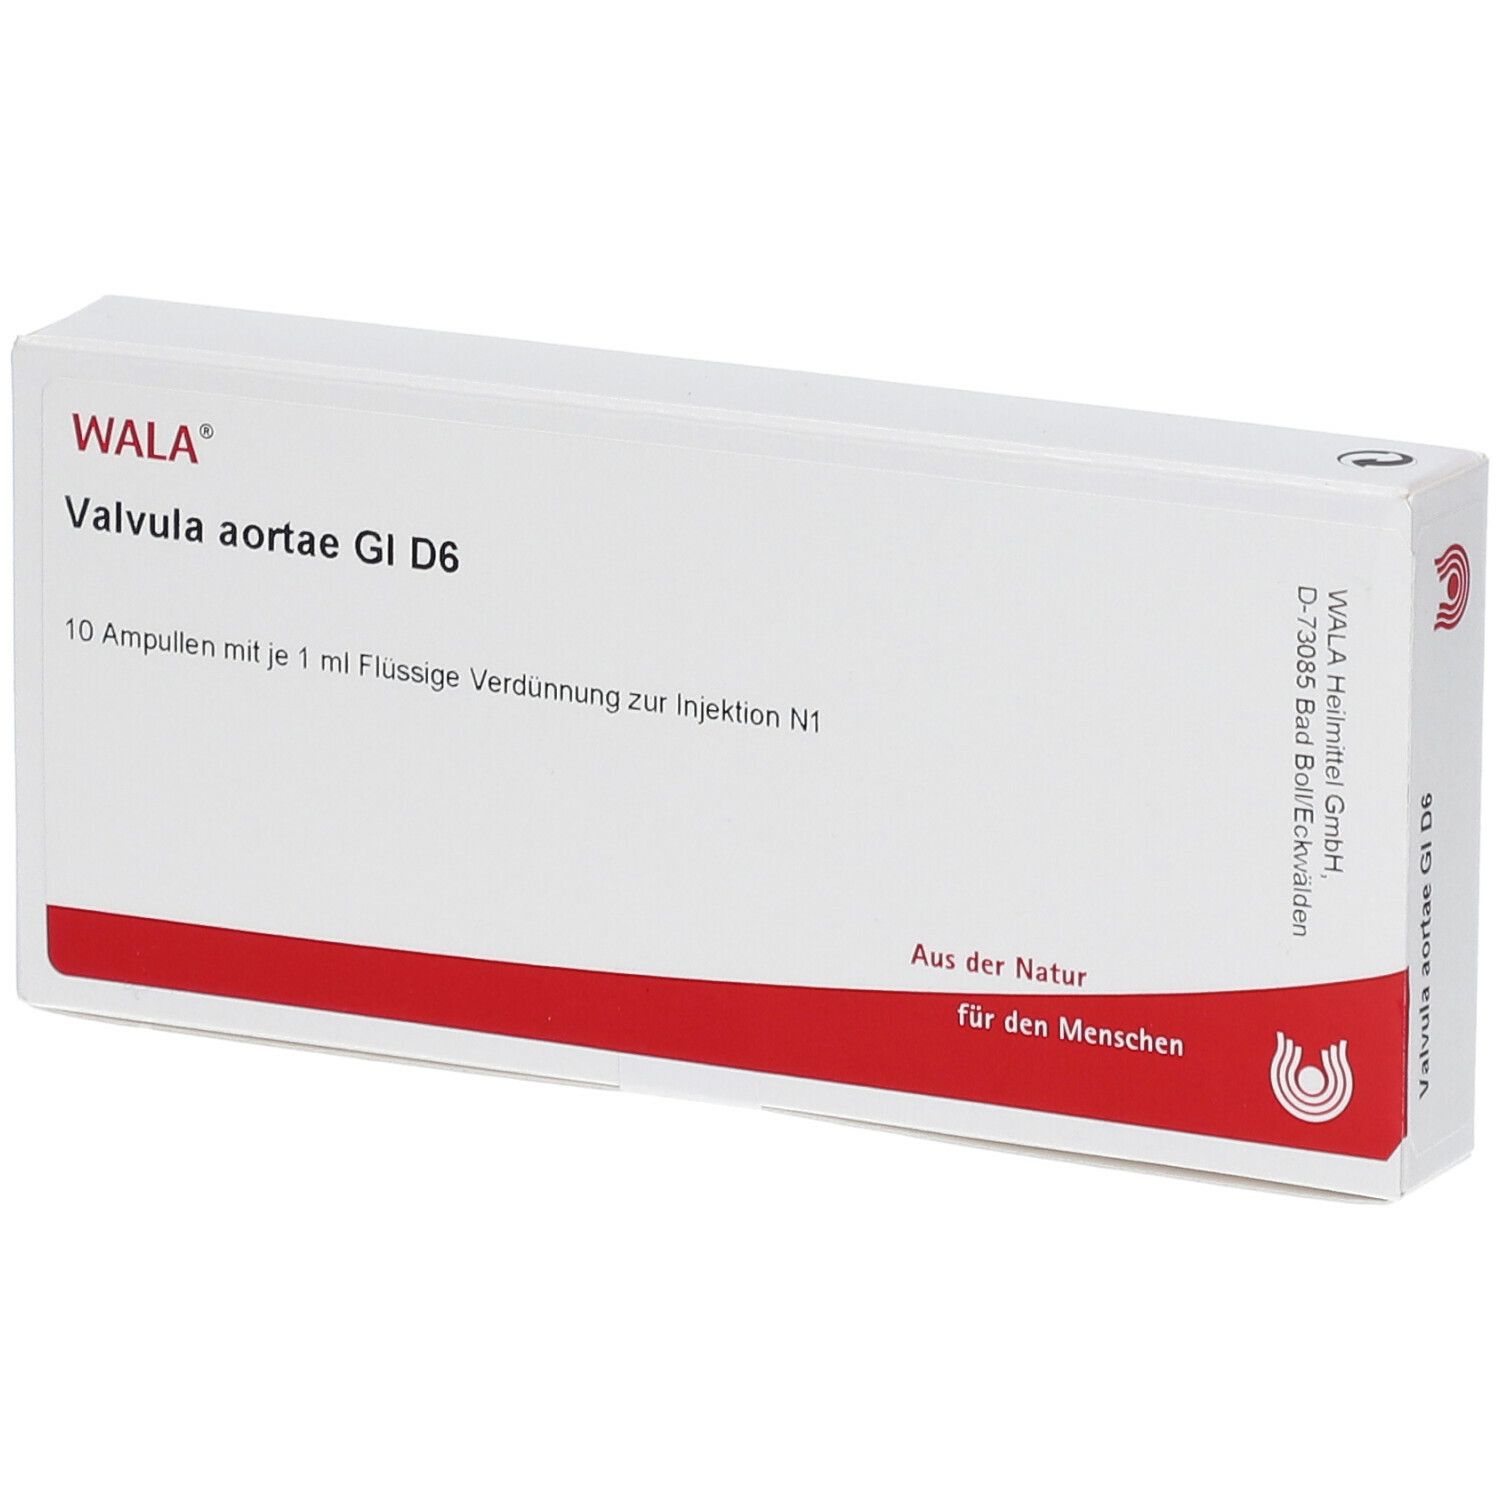 Wala® Valvula aortae Gl D 6